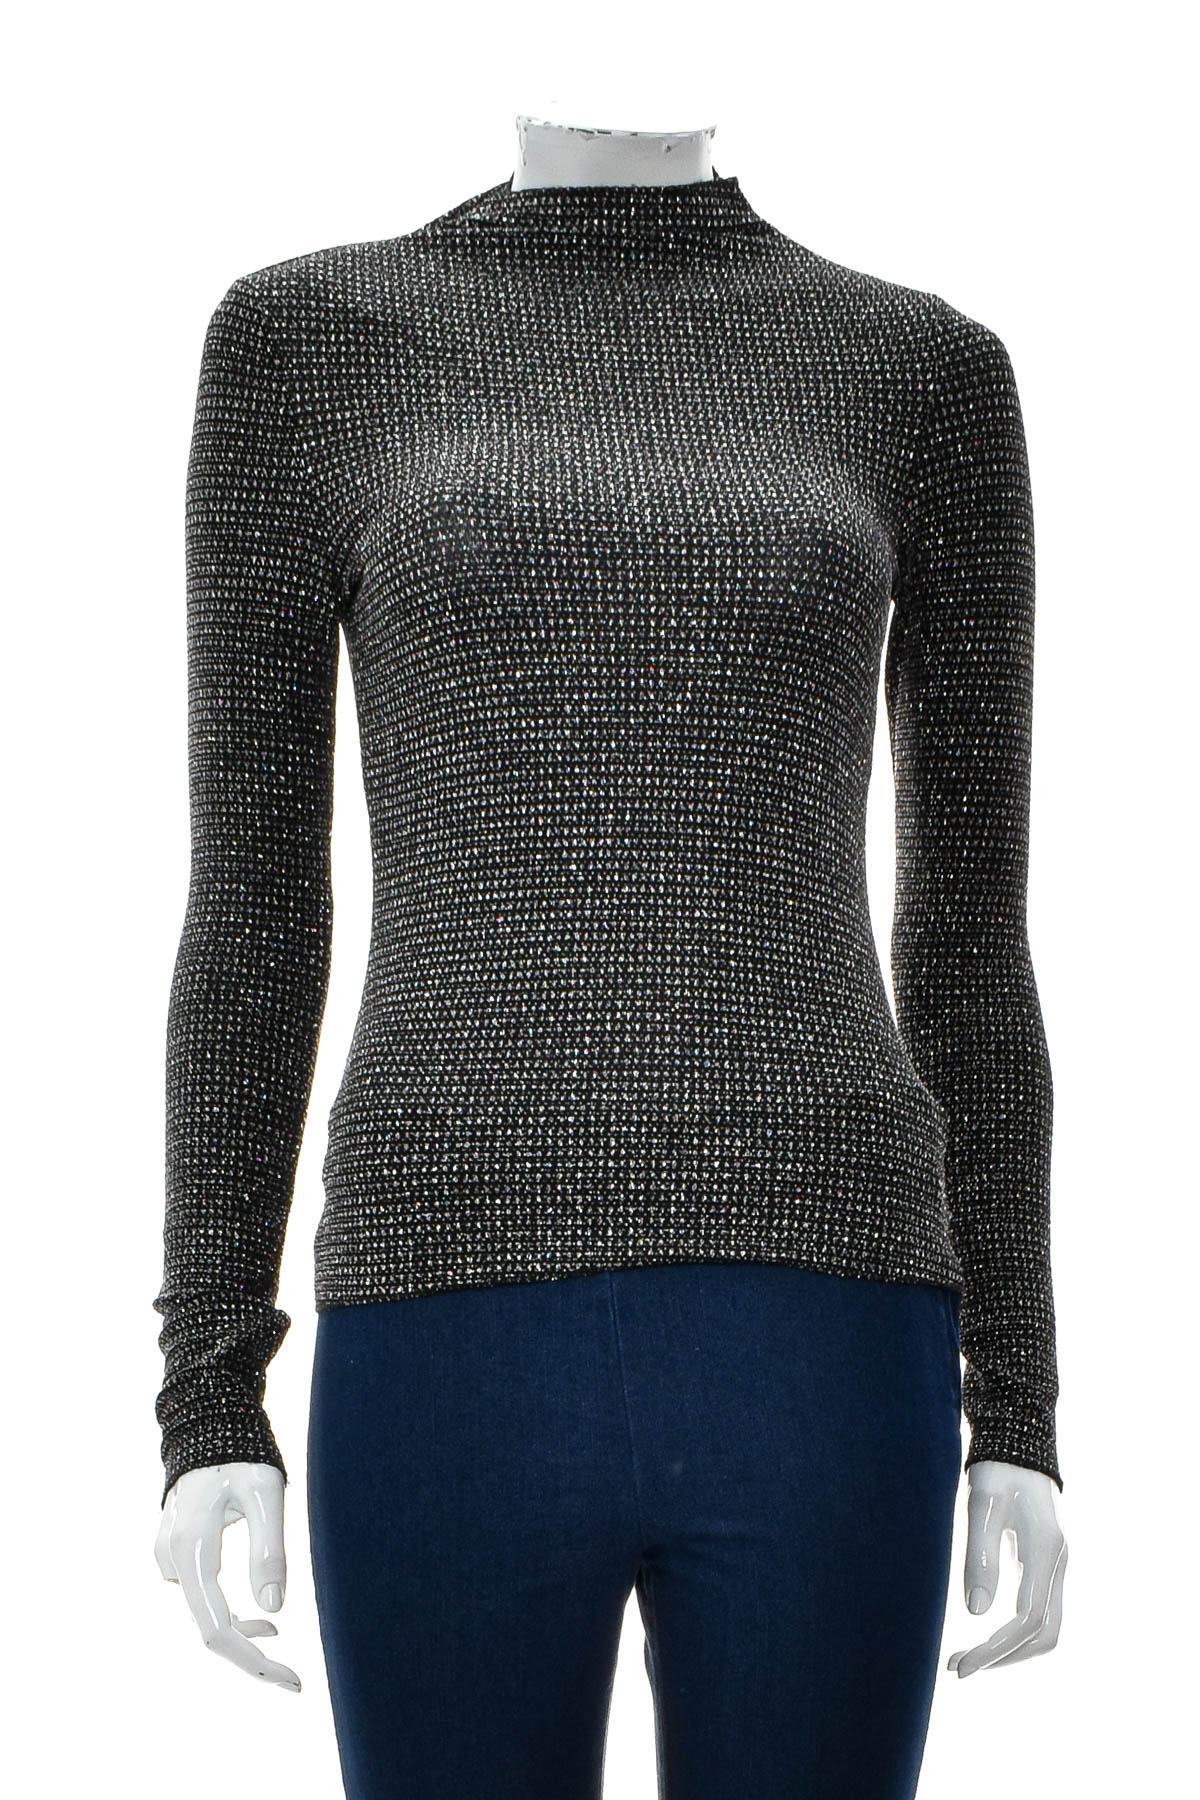 Women's sweater - H&M - 0